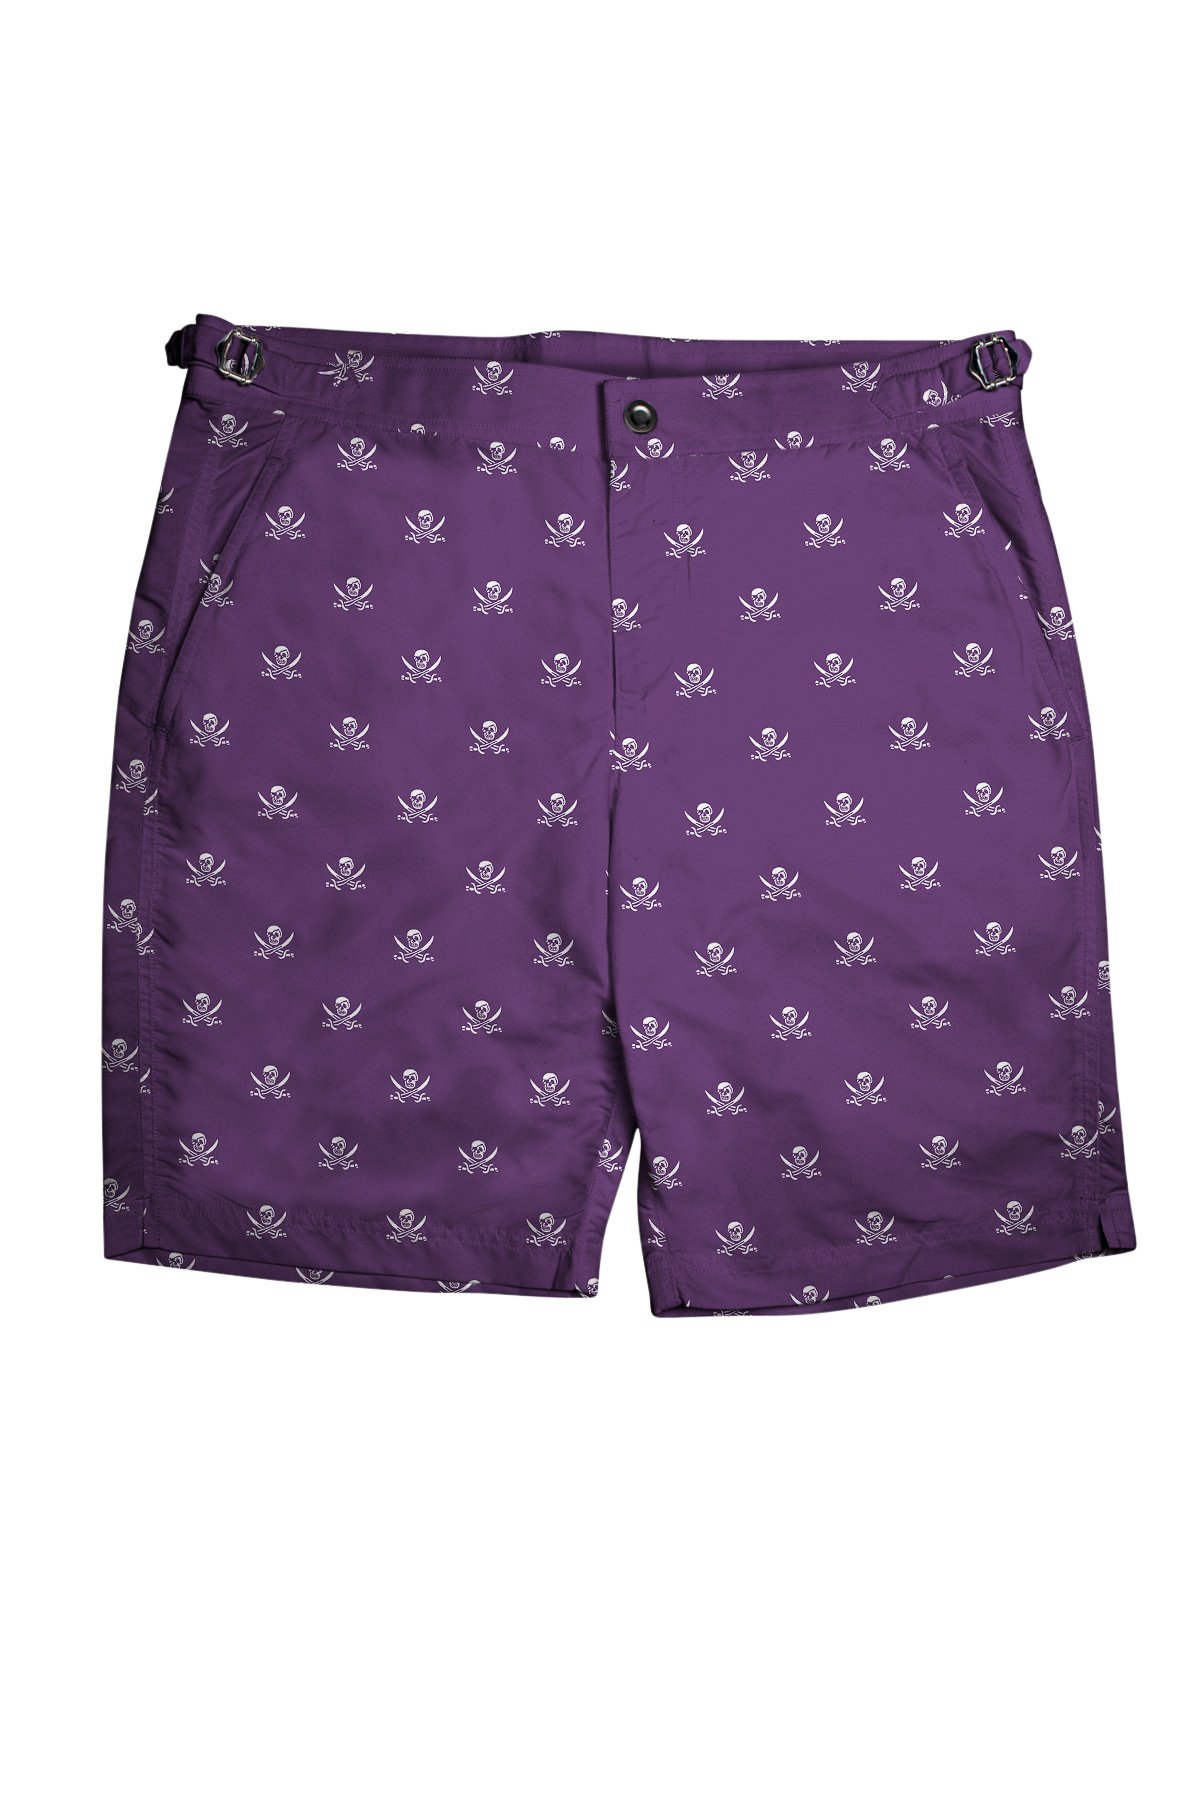 Purple Jolly Roger Swim Swim Shorts